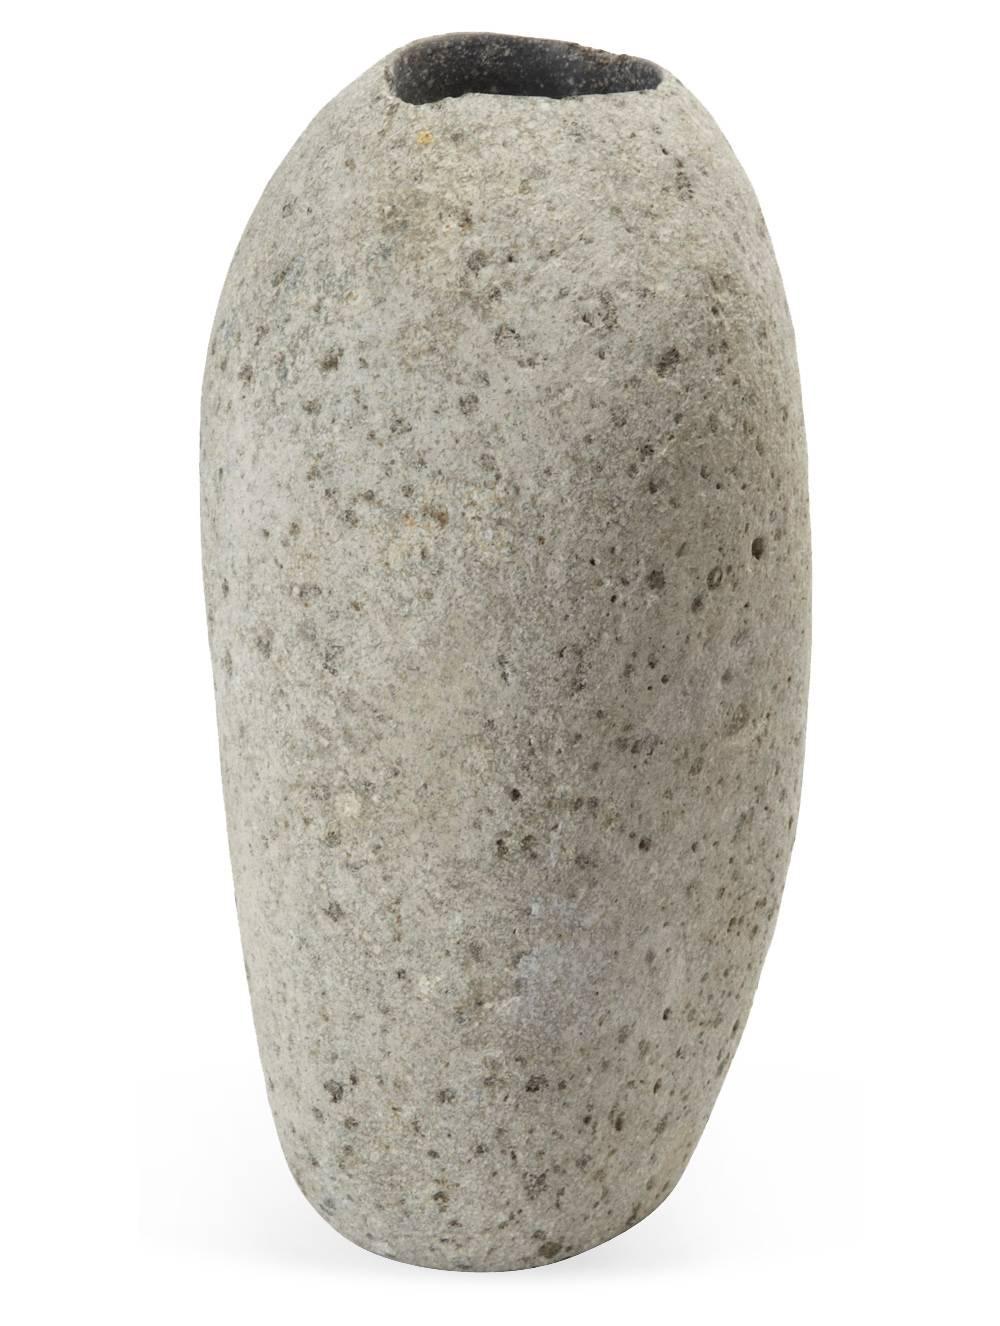 Organic votive or tea candleholder in stone. Natural shape, unpolished.